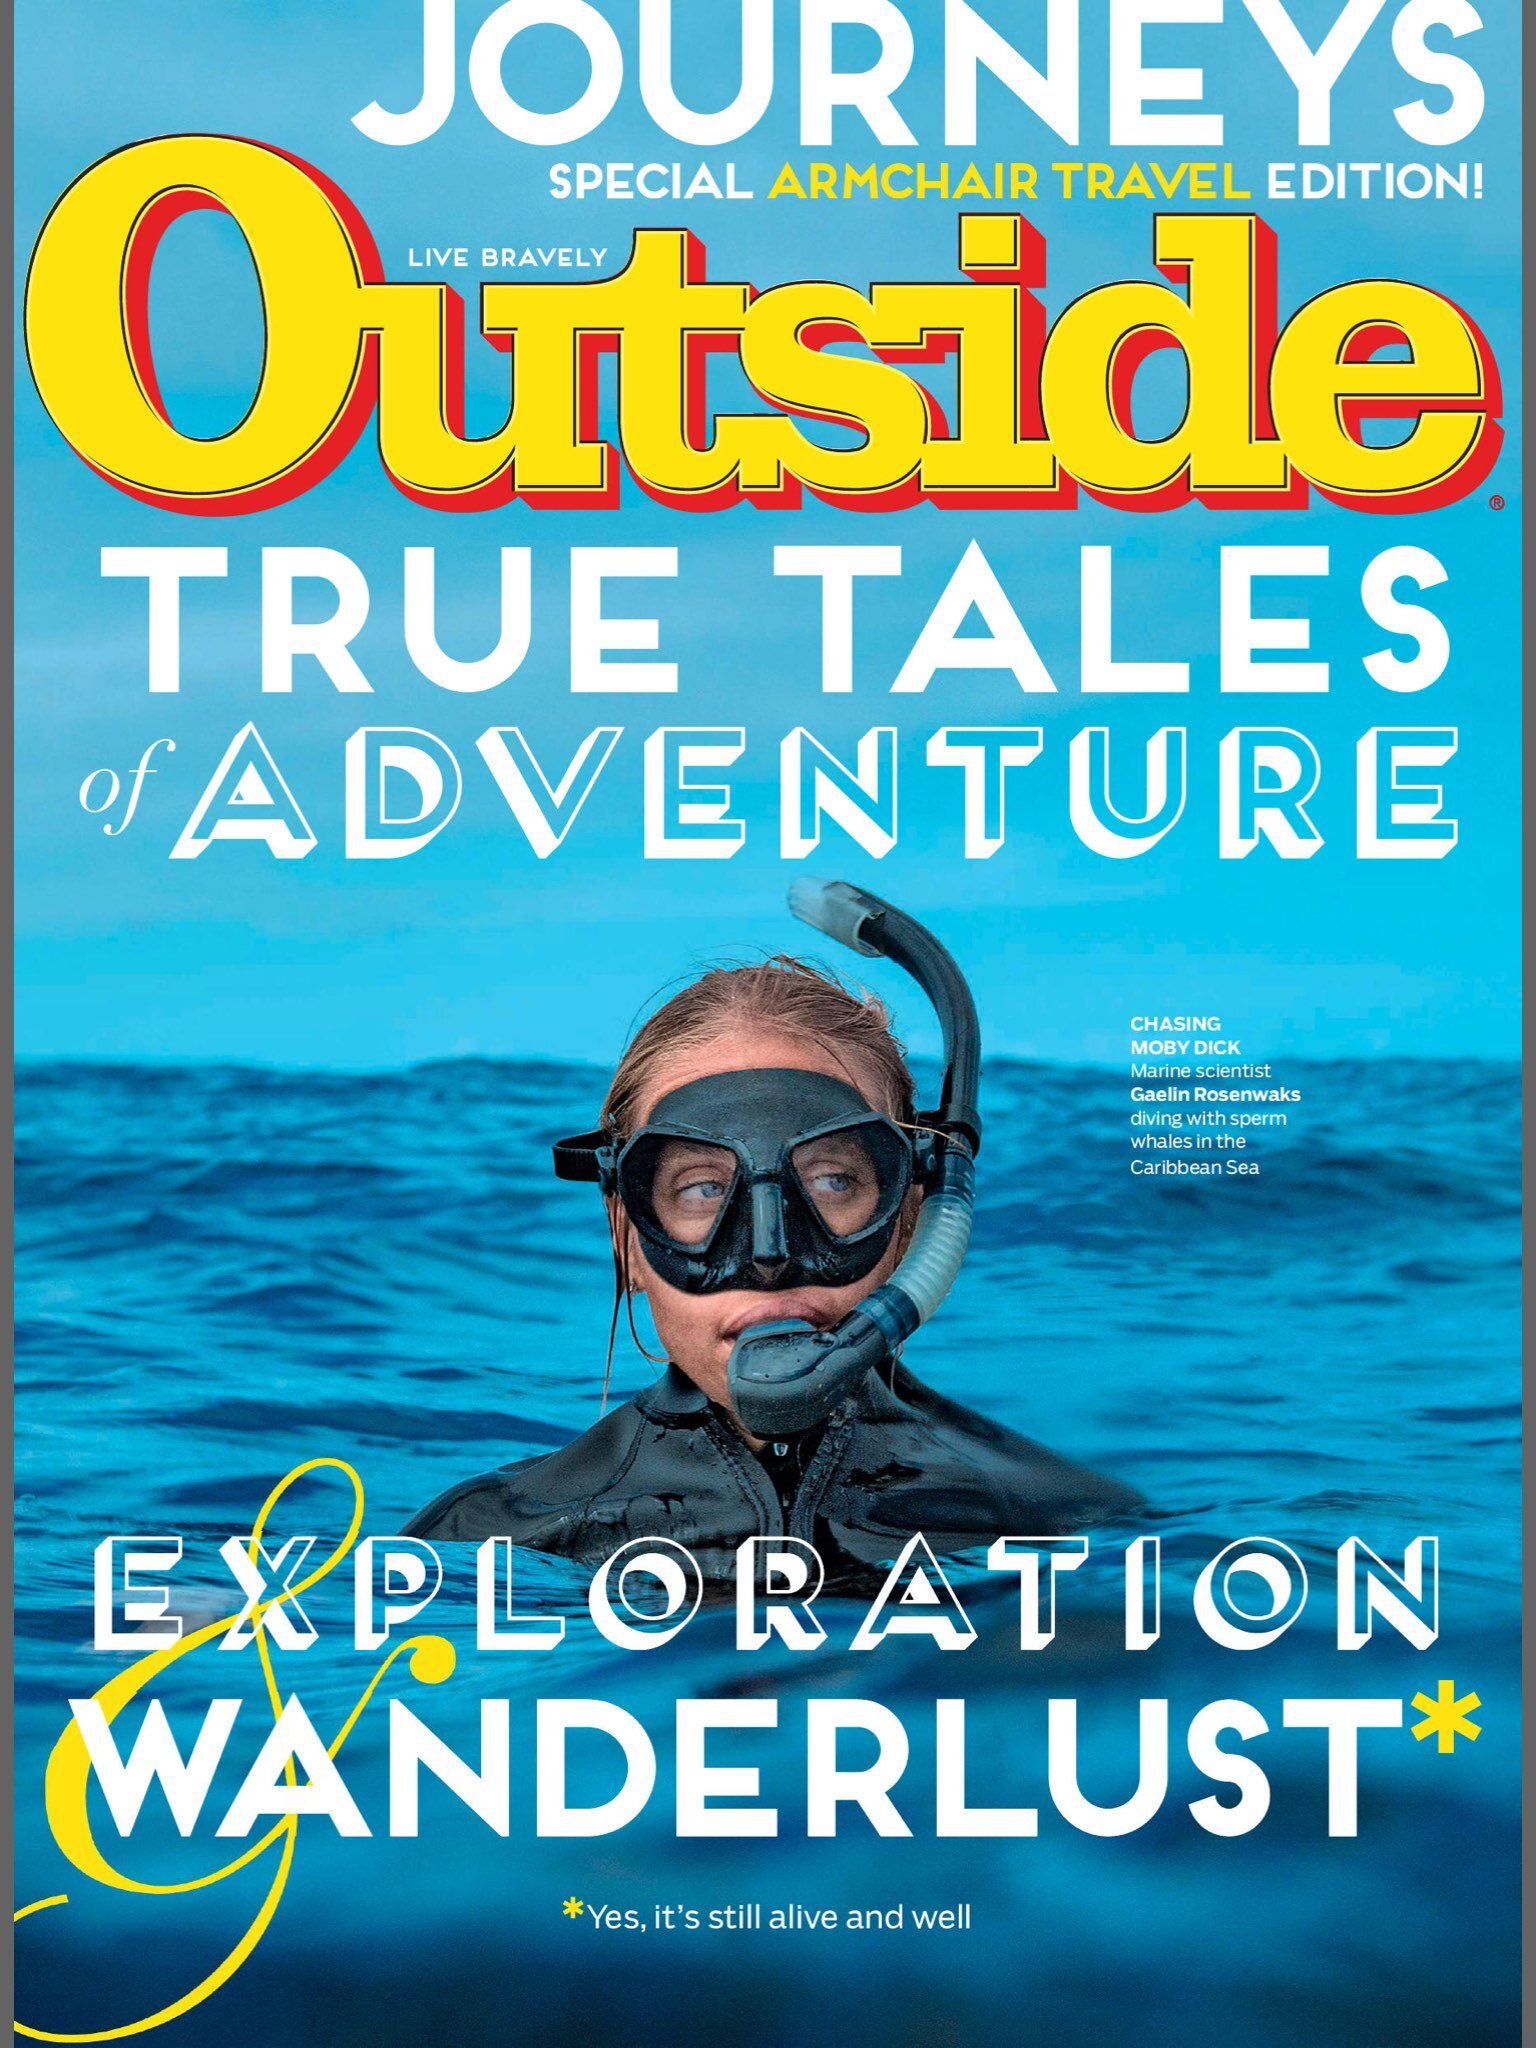 Outside Magazine Cover